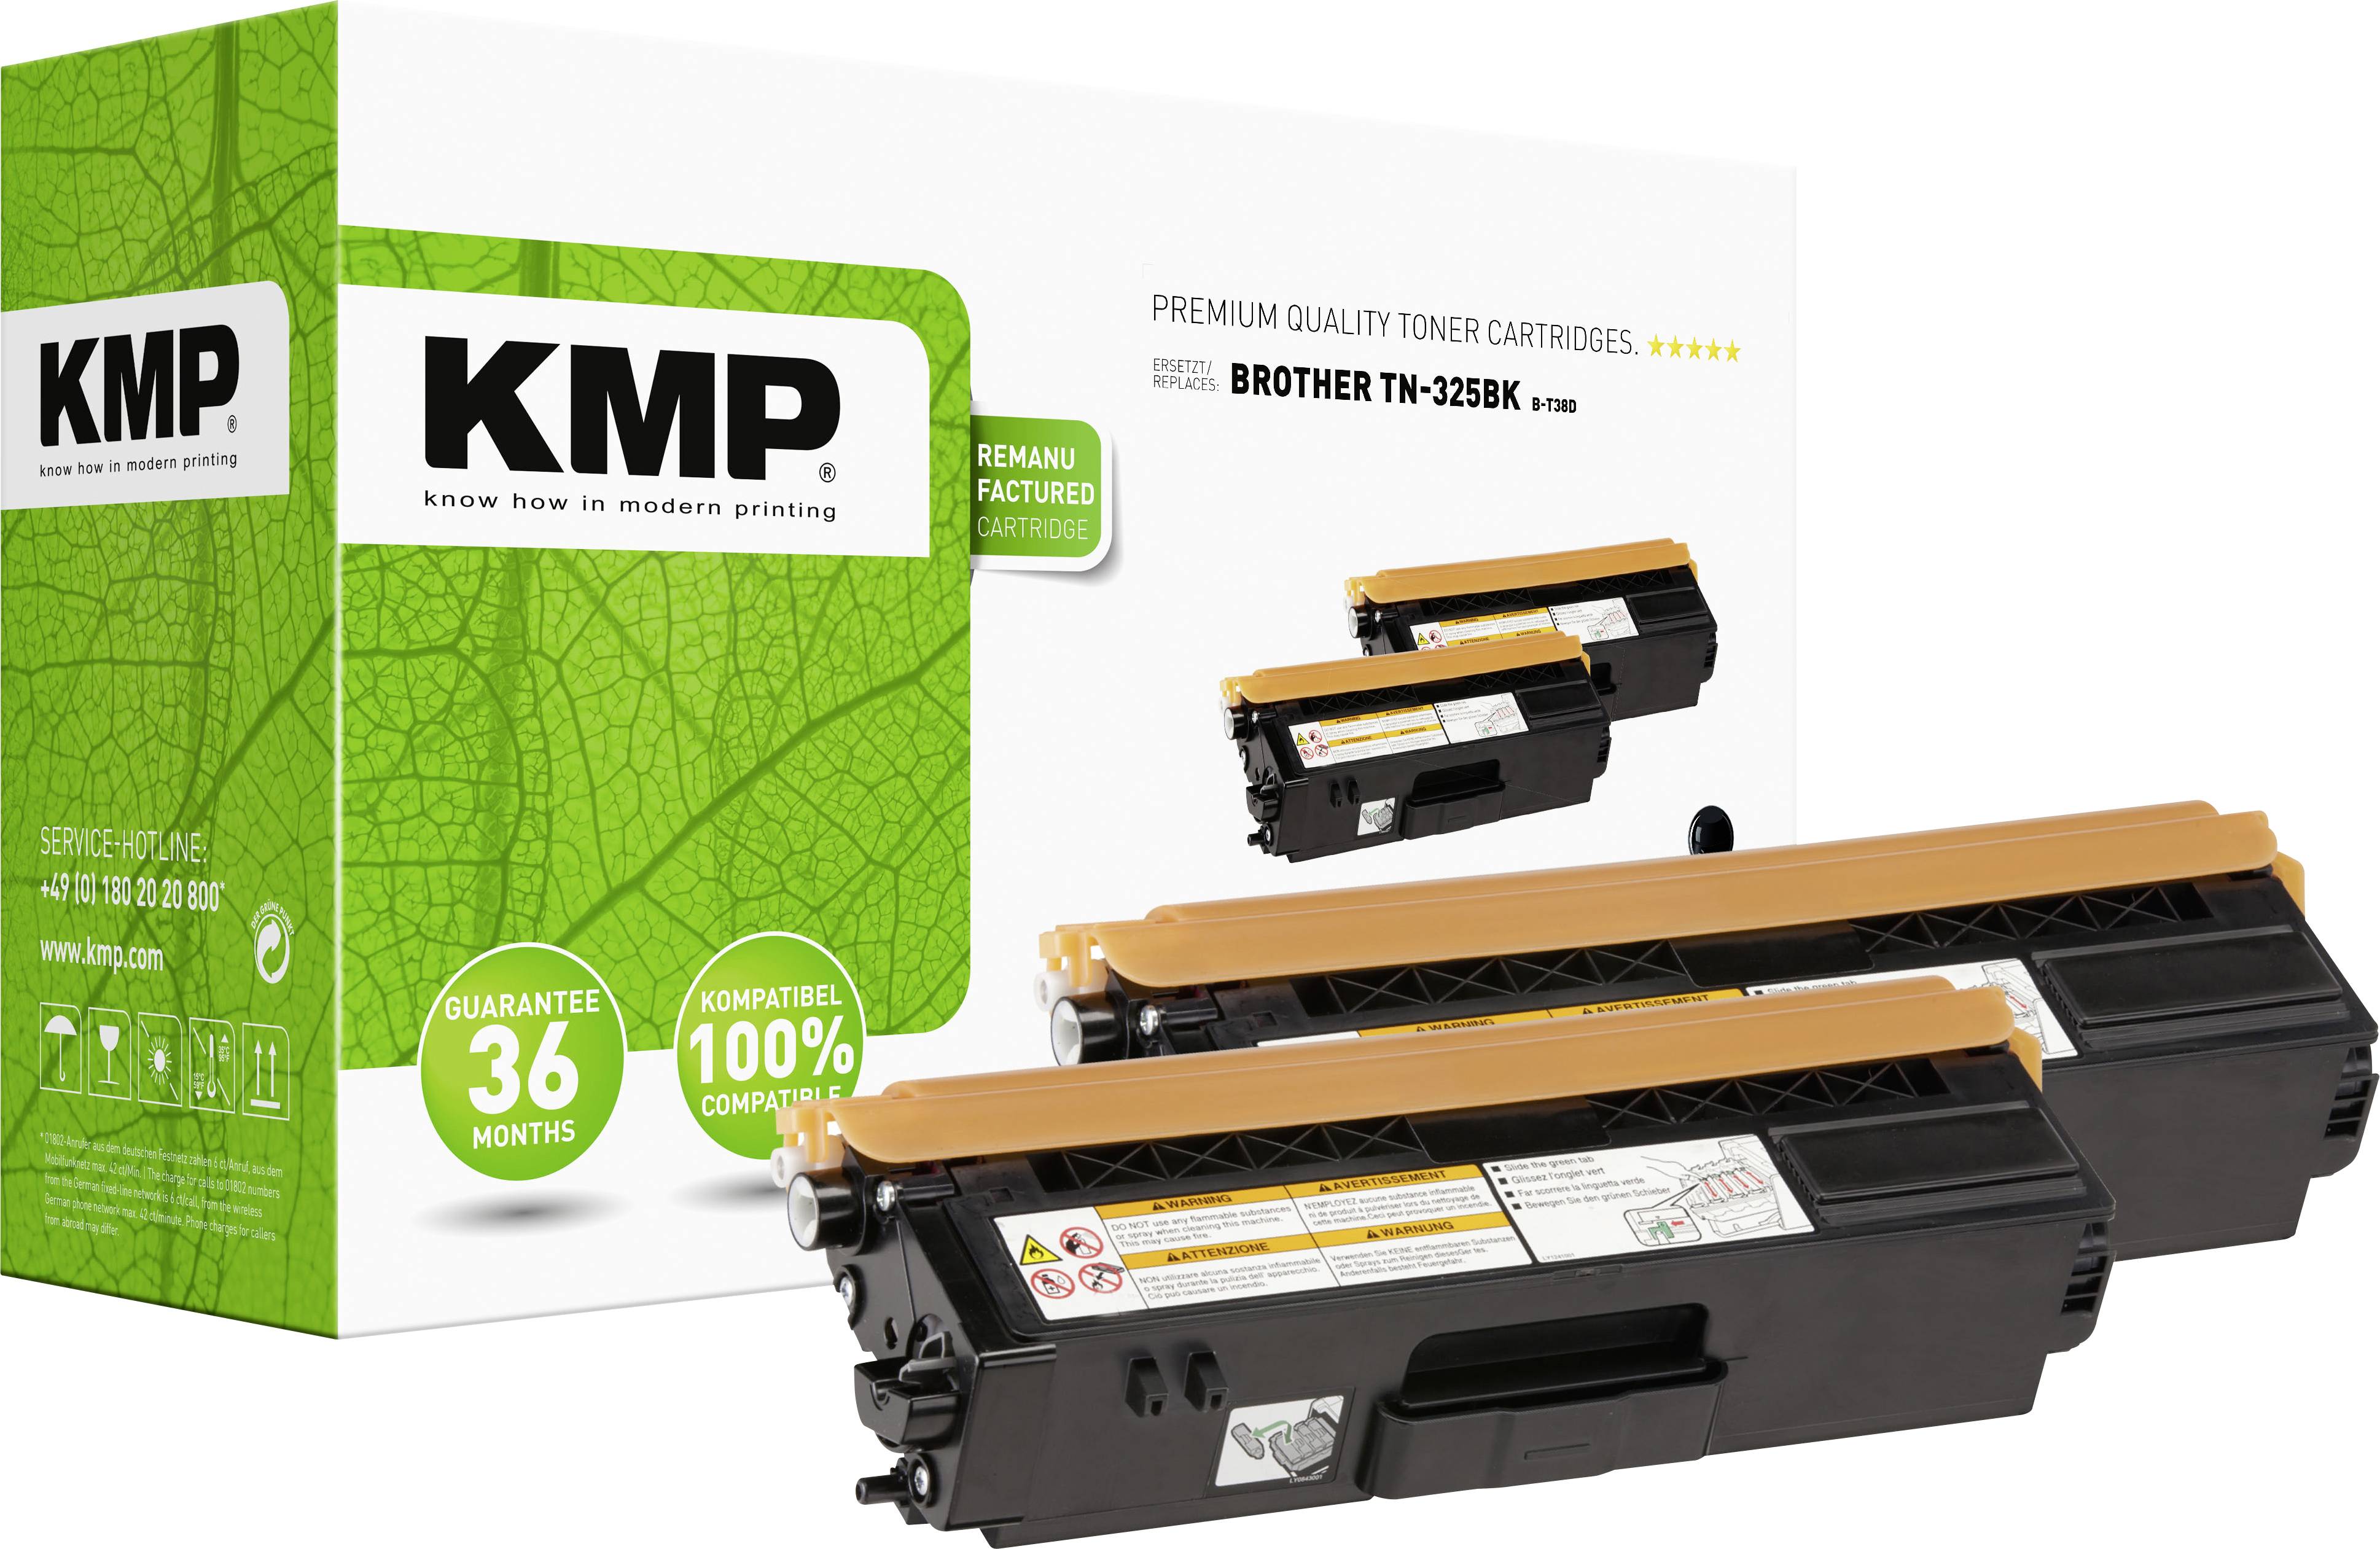 KMP Toner cartridge pack replaced Brother TN-325BK, TN325BK Compatible Black B-T38D |